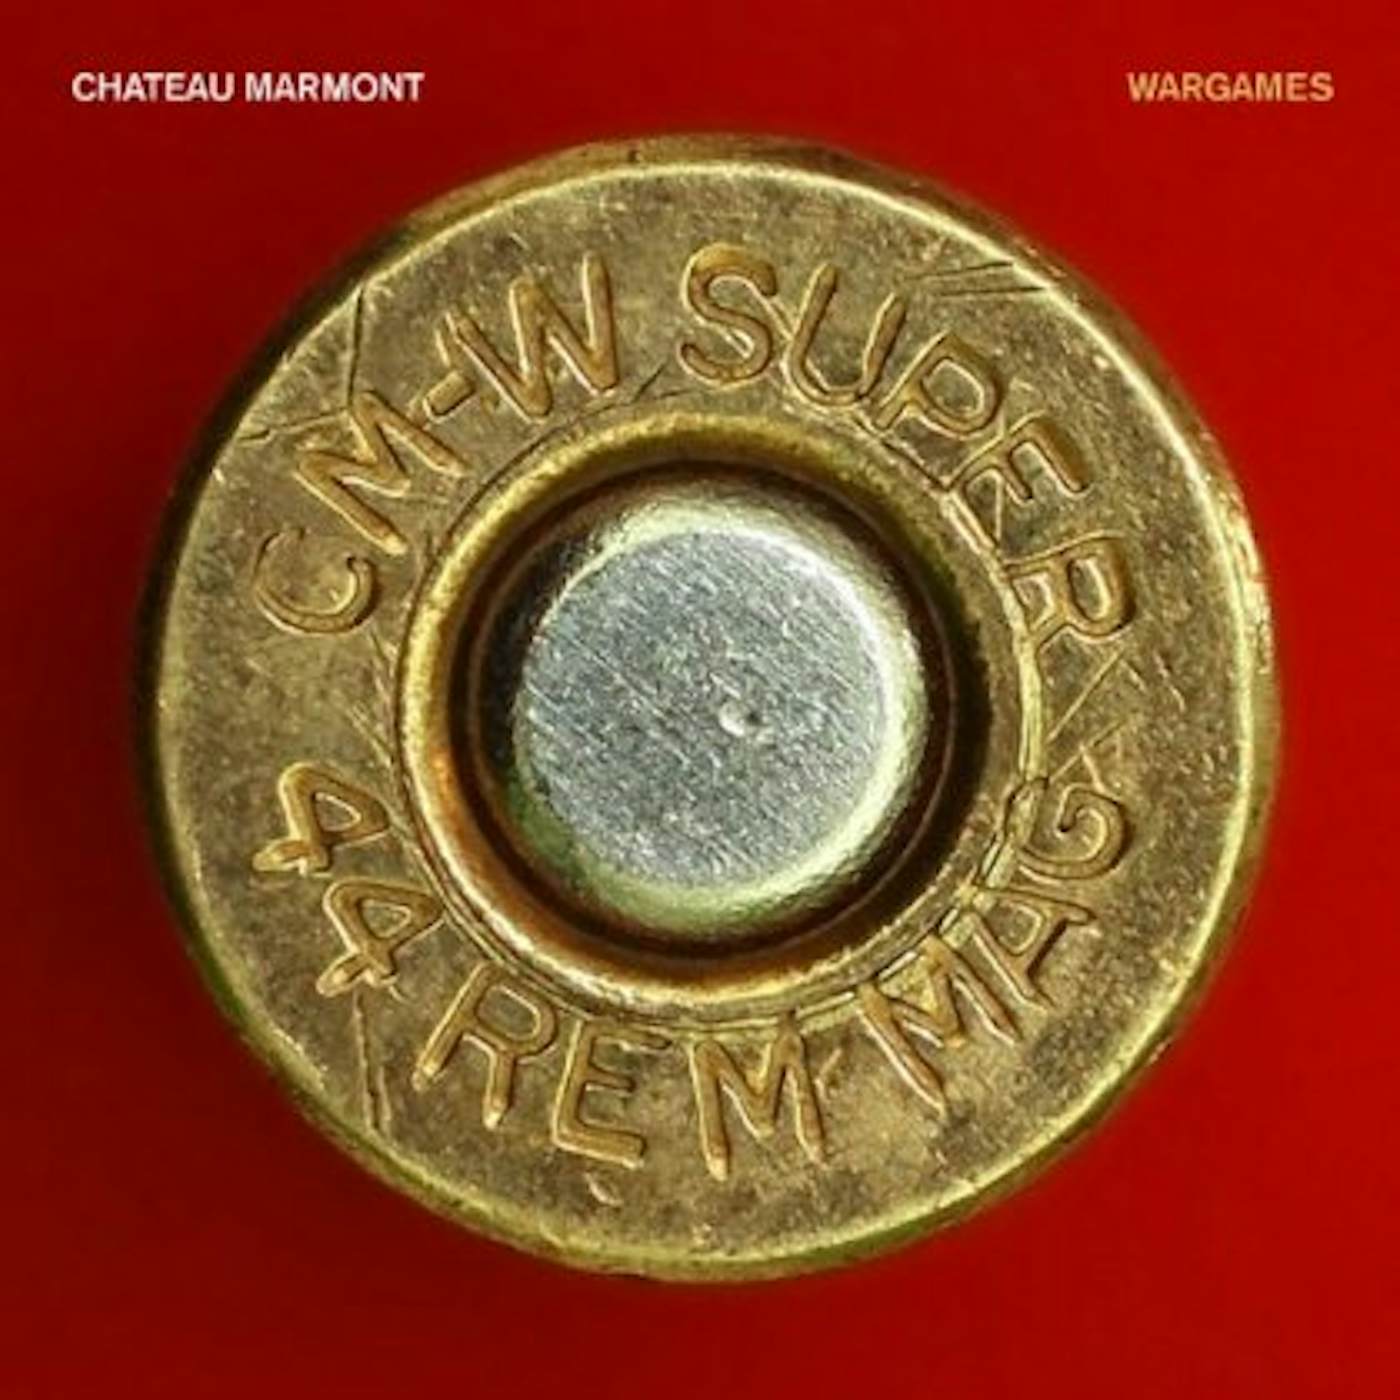 Chateau Marmont WARGAMES EP Vinyl Record